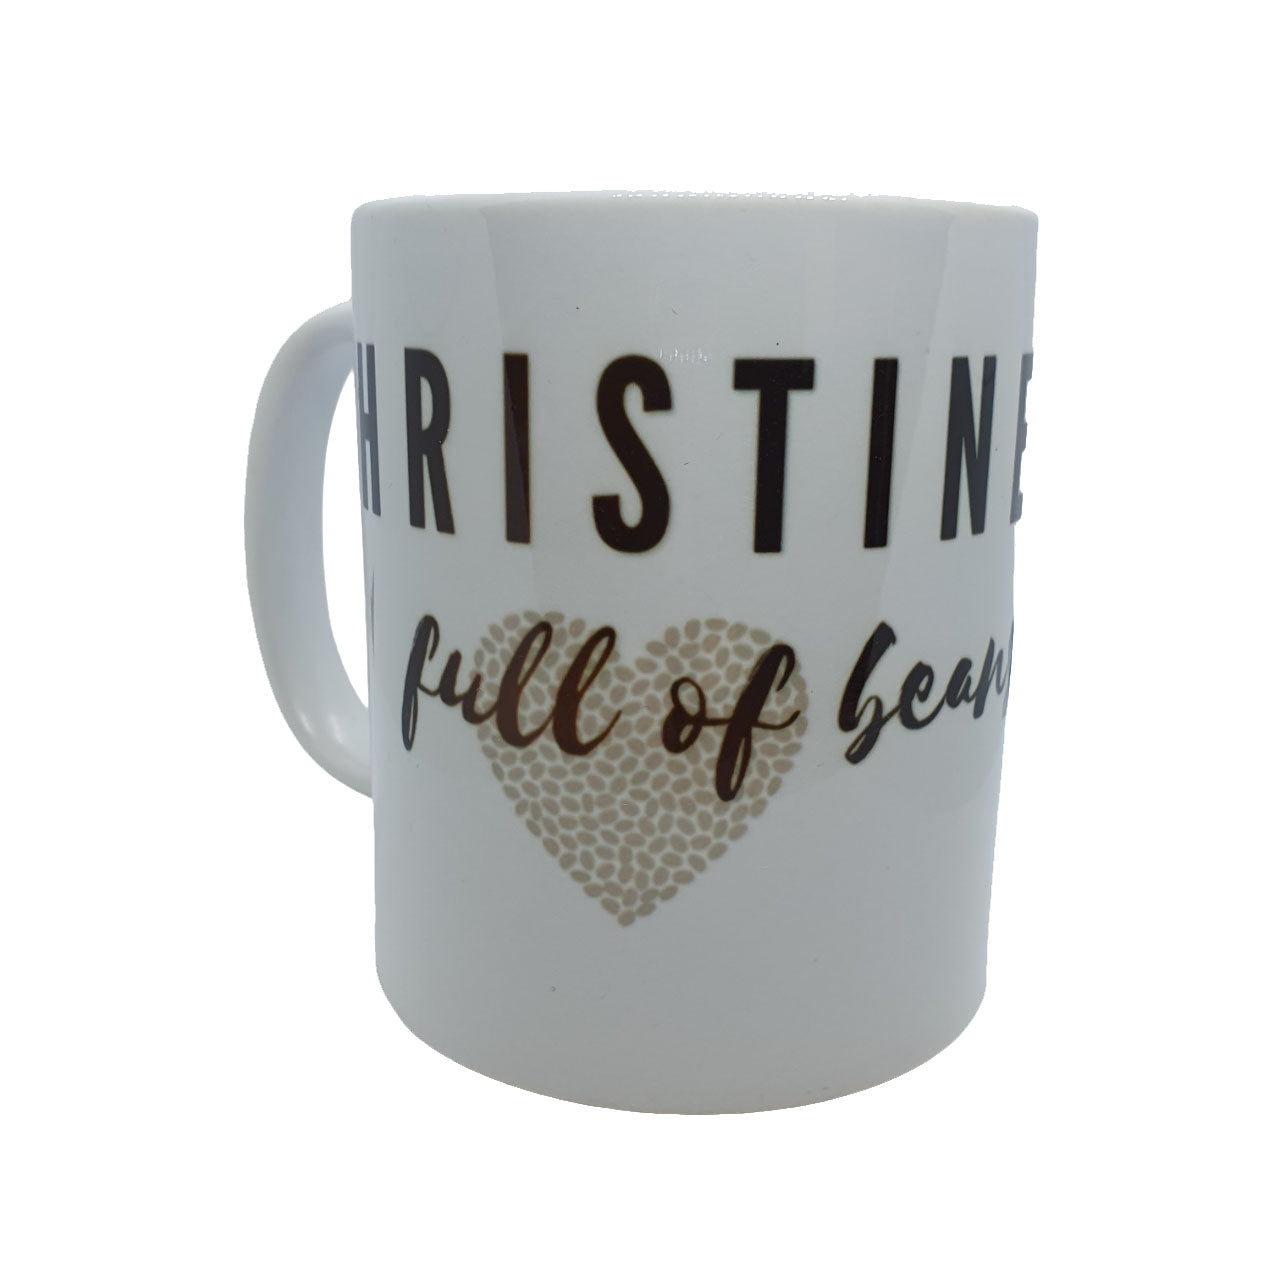 christine mug with coffee bean heart